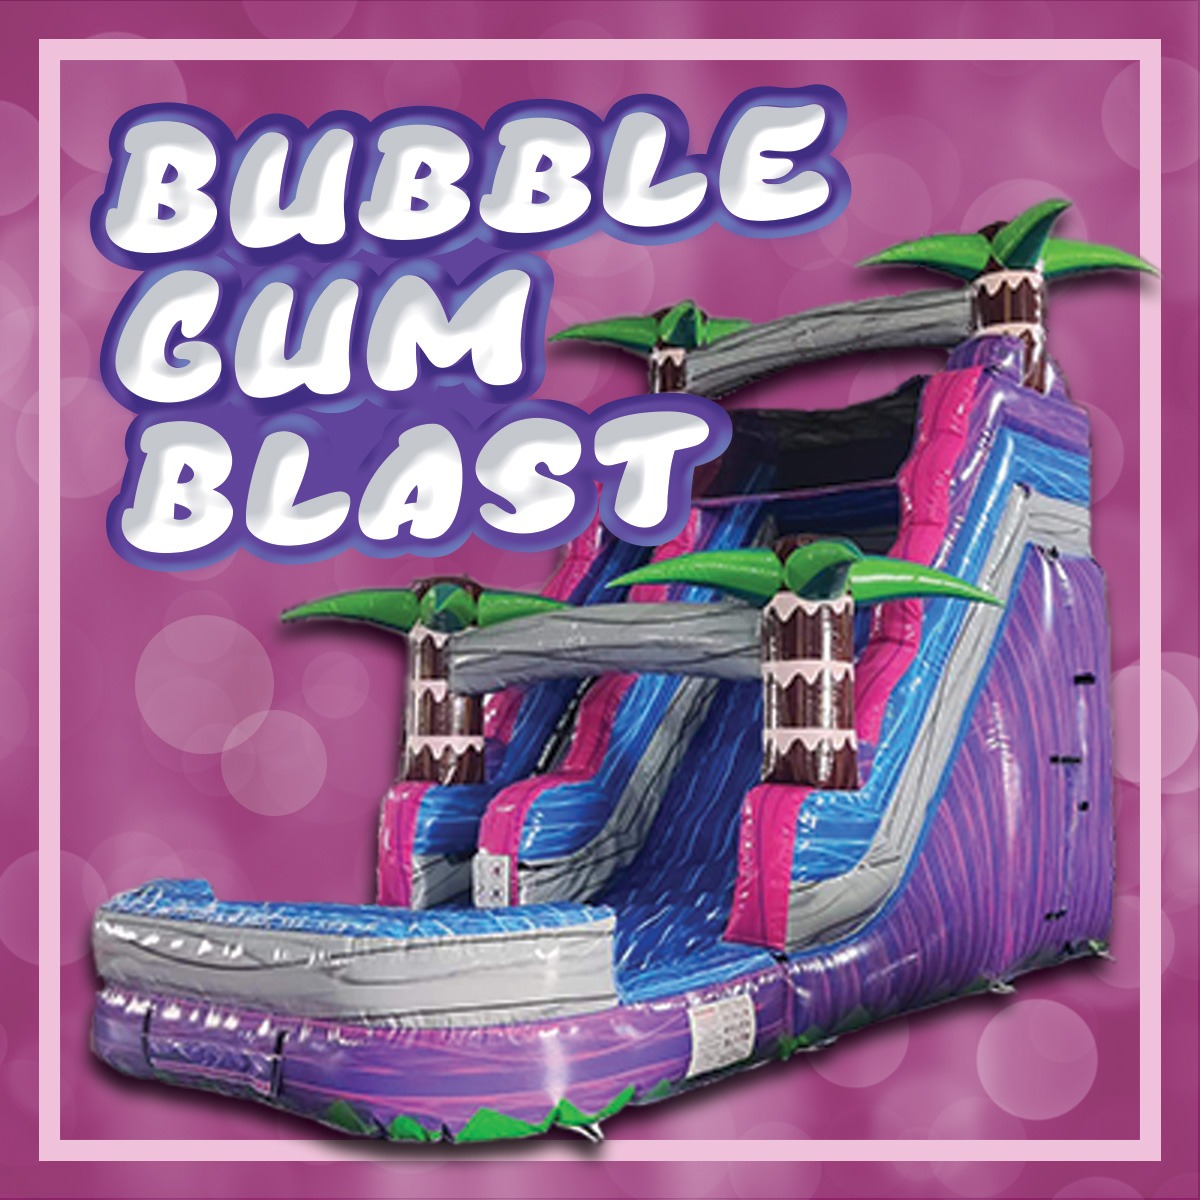 Buble Gum Blast Waterslide - ABC123 Inflatables - Birmingham Alabama 